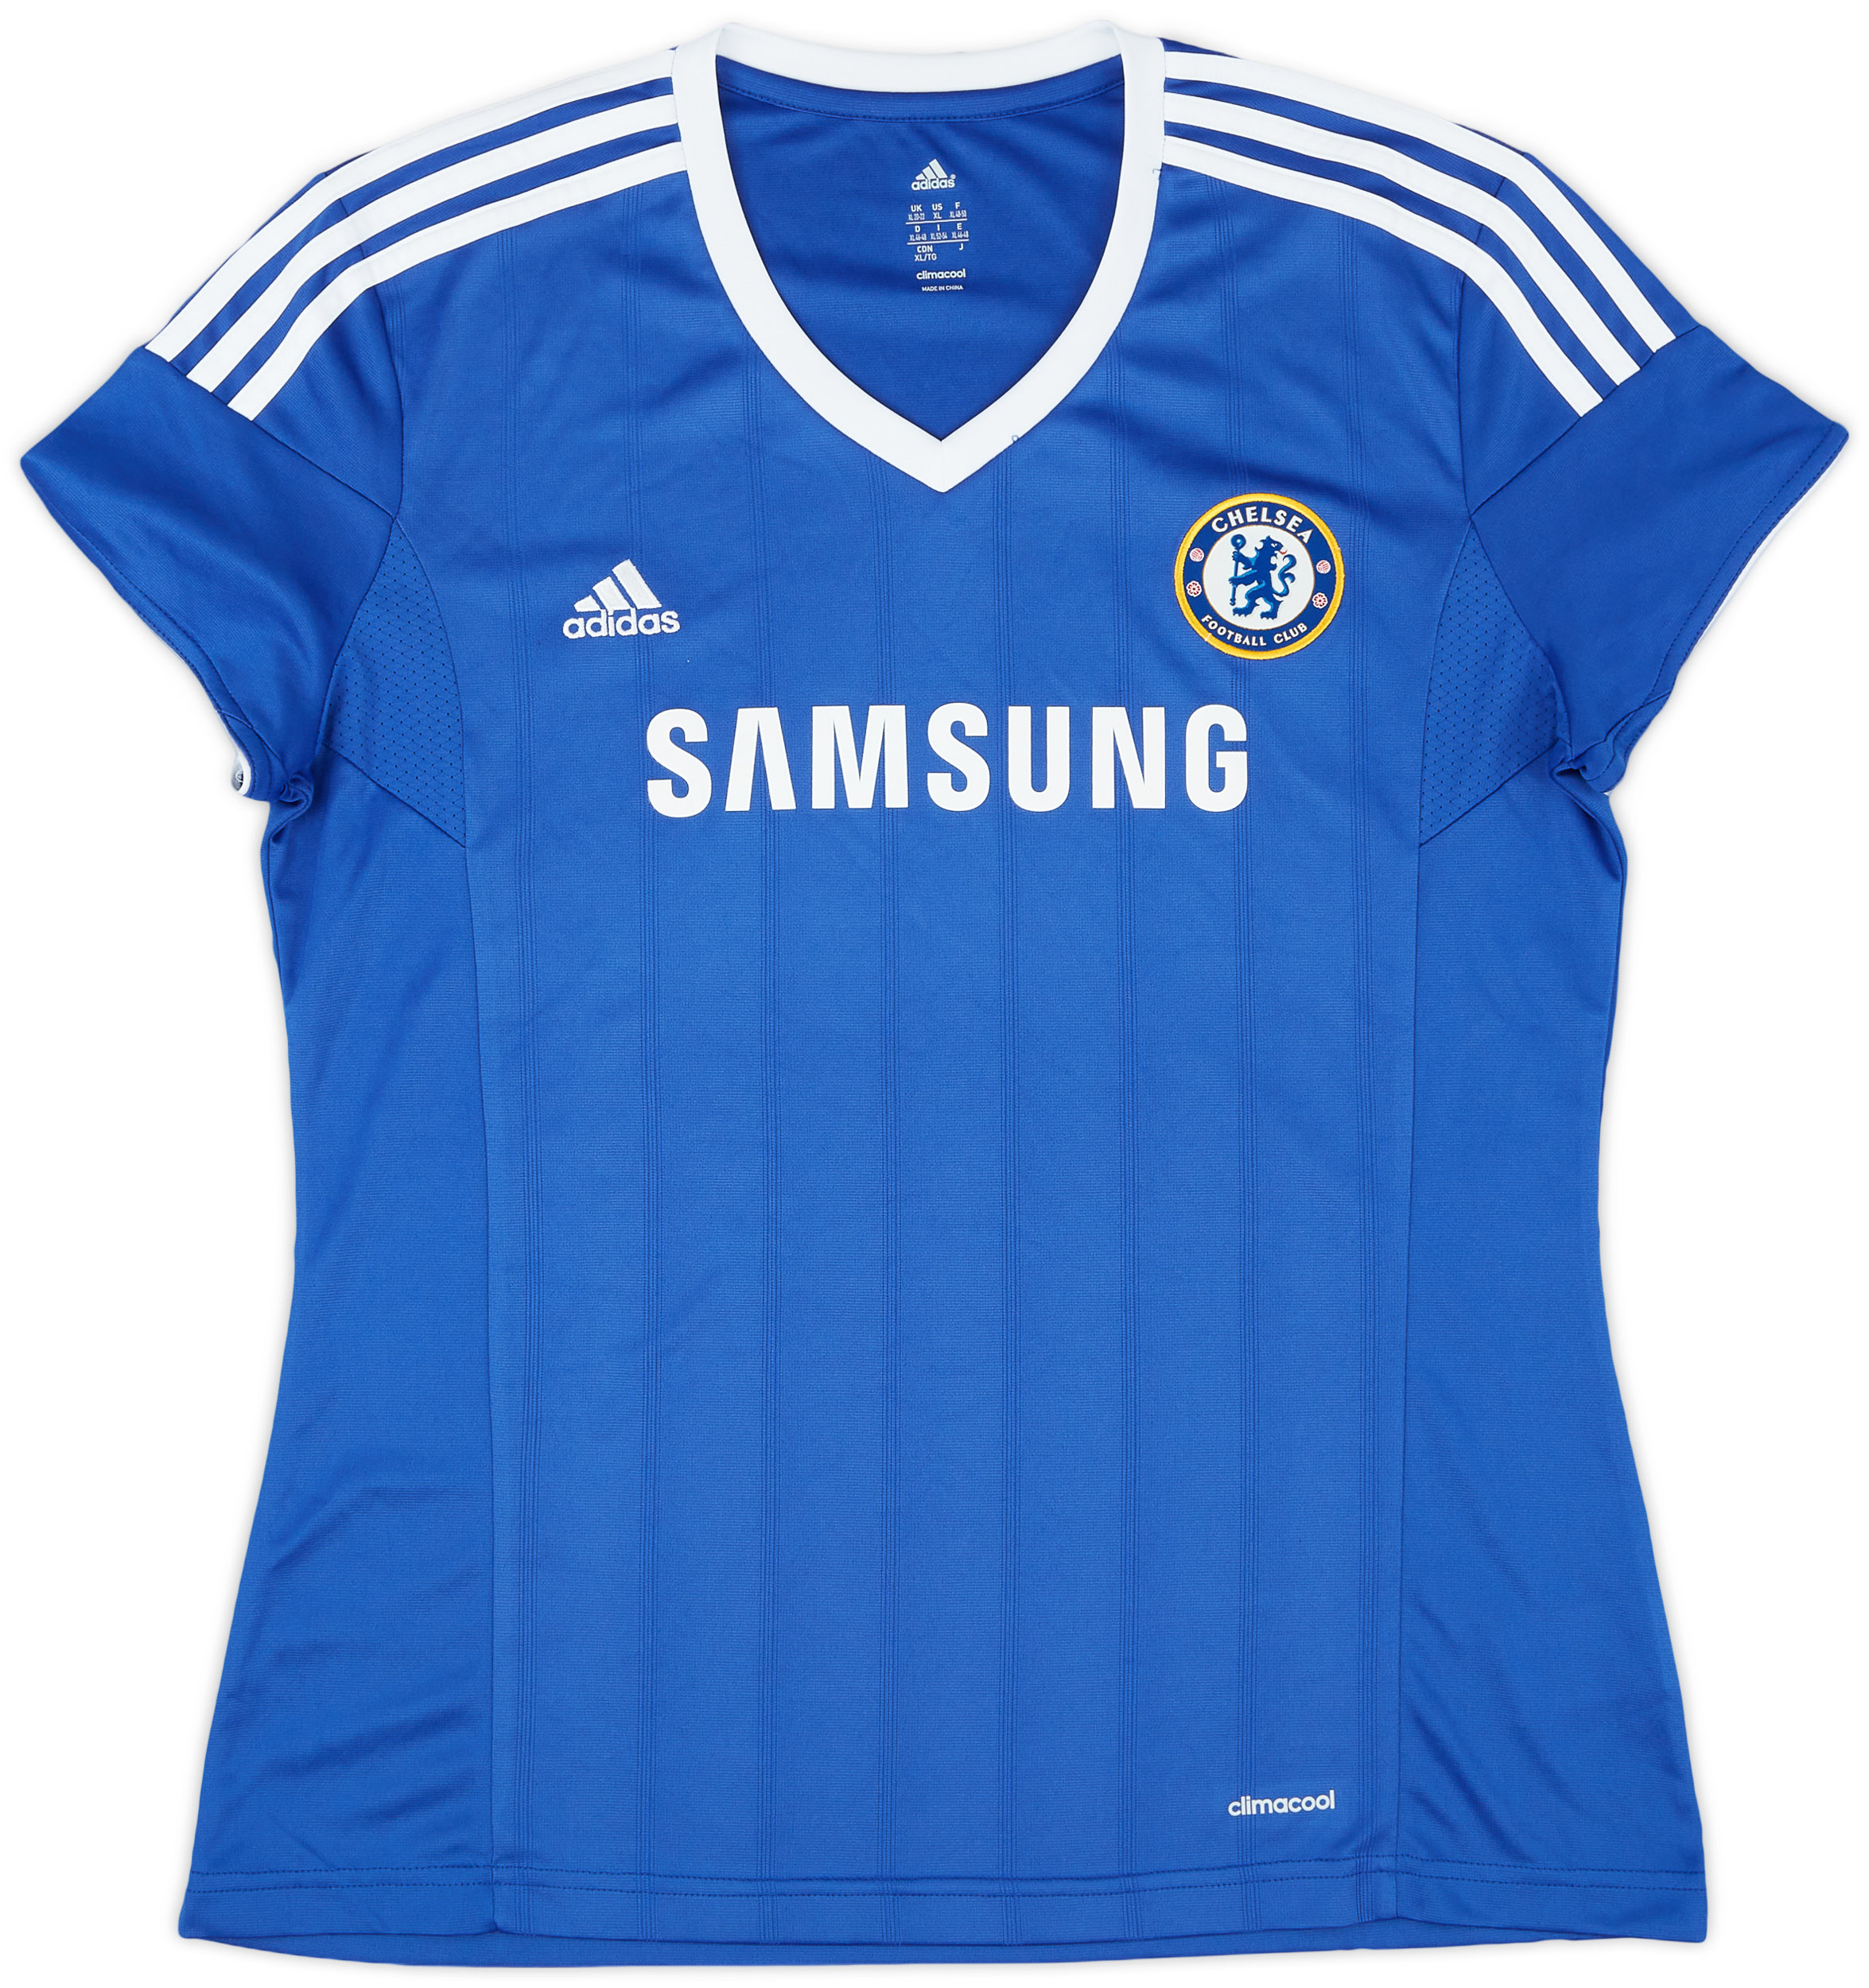 2013-14 Chelsea Home Shirt - 9/10 - (Women's )